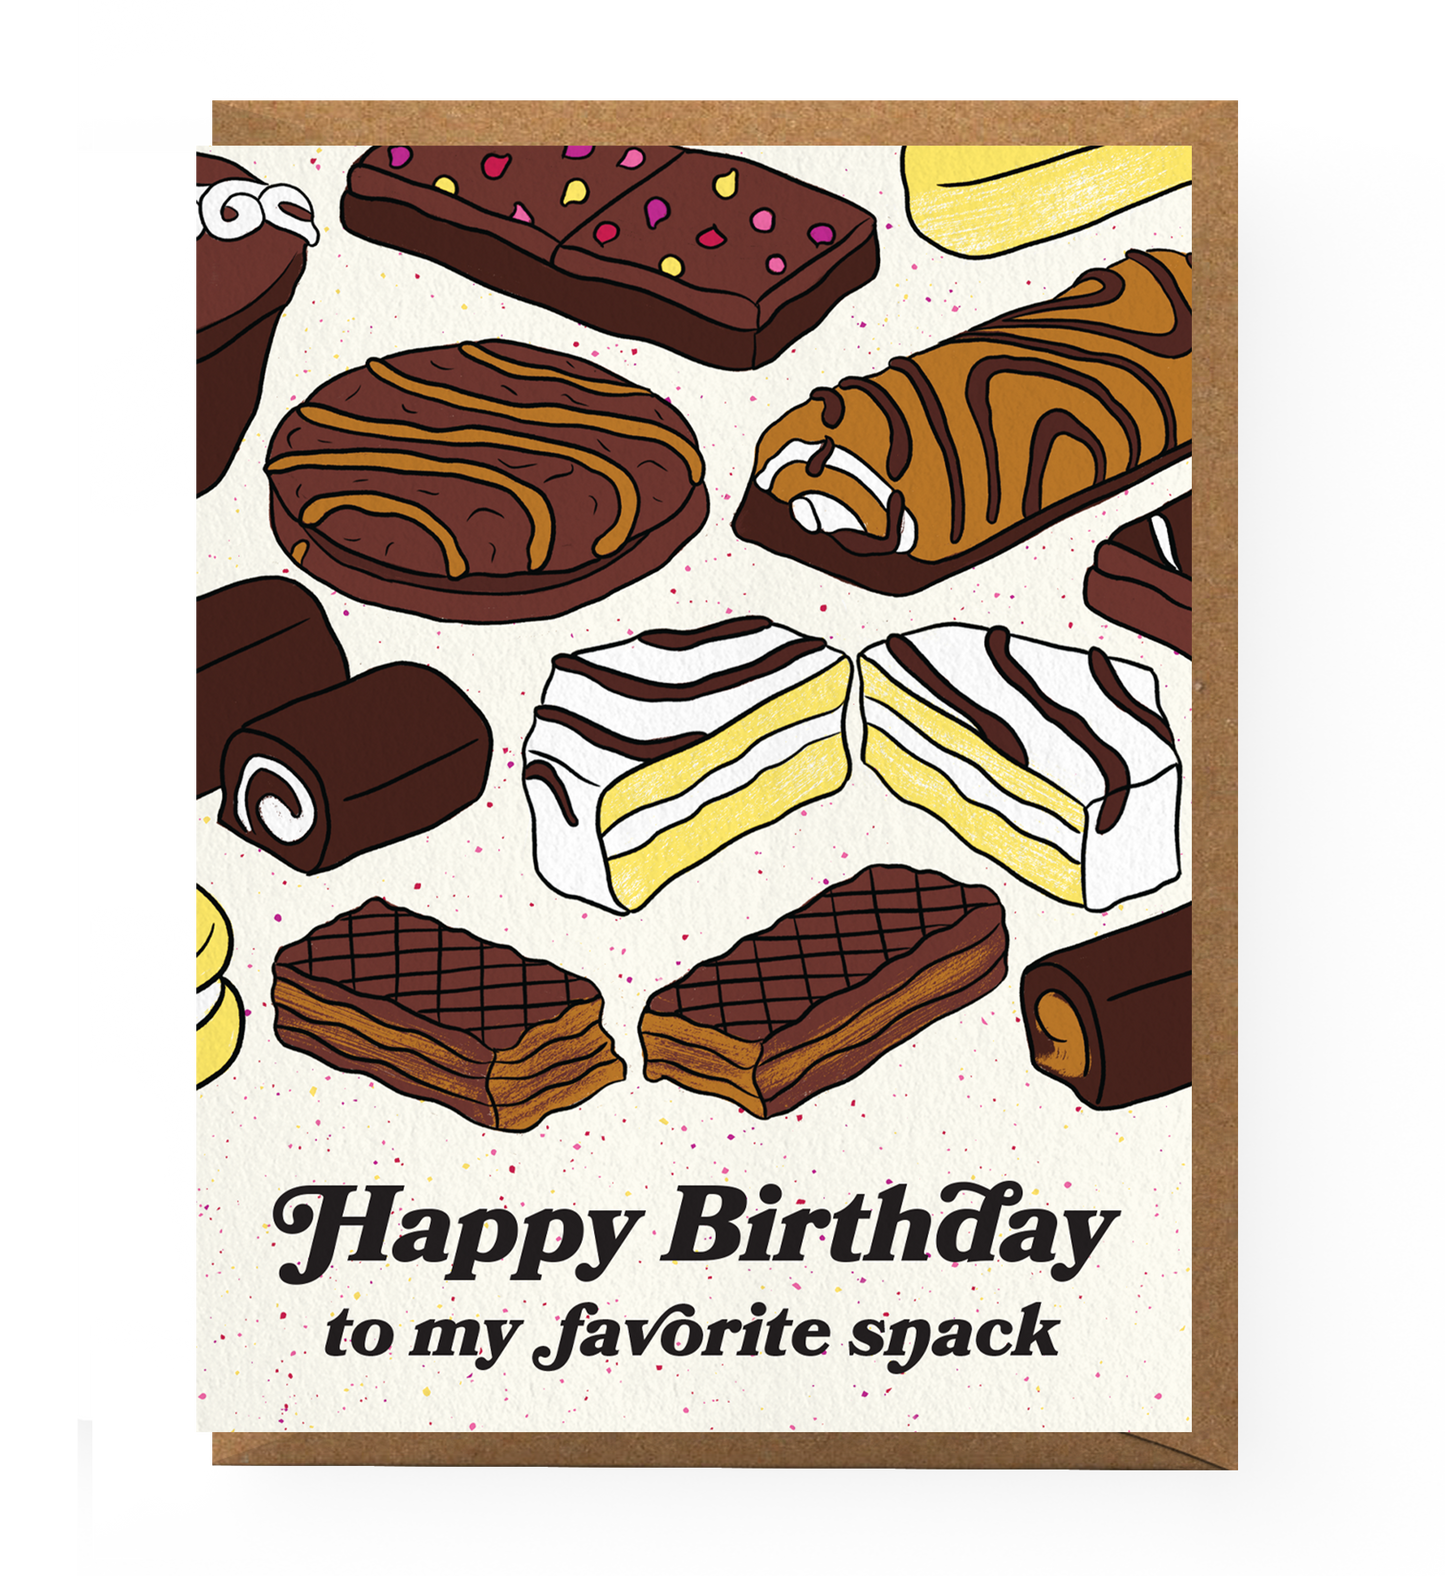 Snack Cake Birthday Card